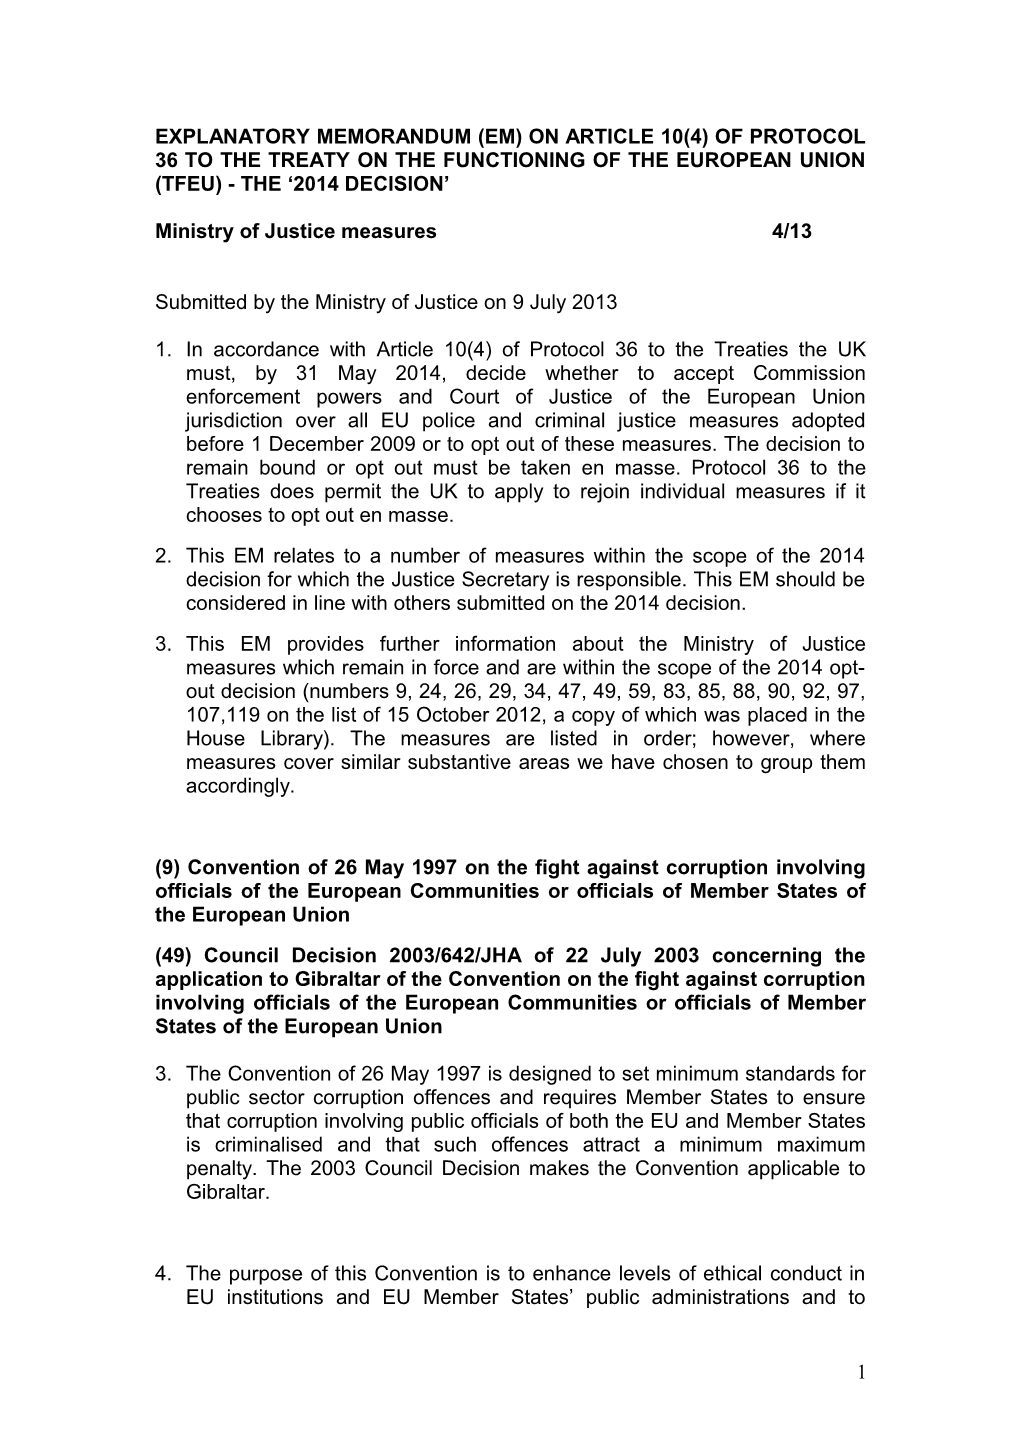 Explanatory Memorandum (Em) on Article 10(4) of Protocol 36 to the Treaty on the Functioning